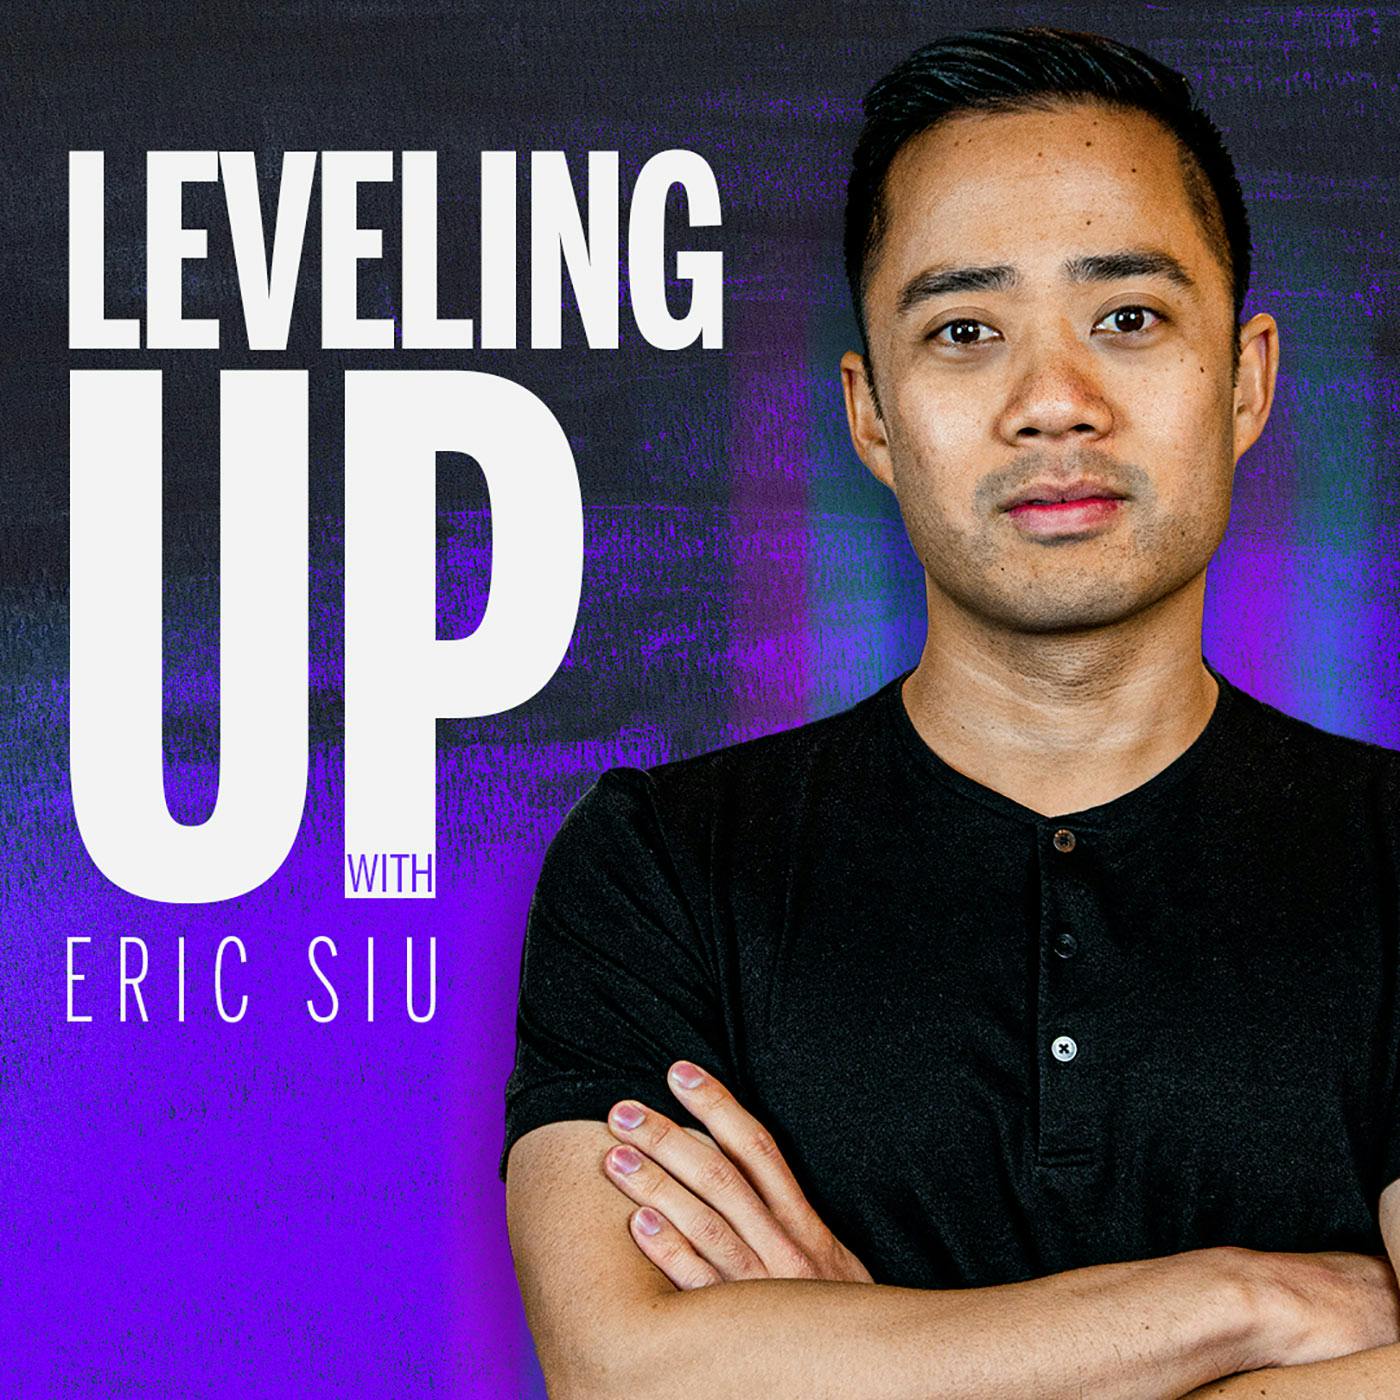 Leveling Up with Eric Siu:Eric Siu